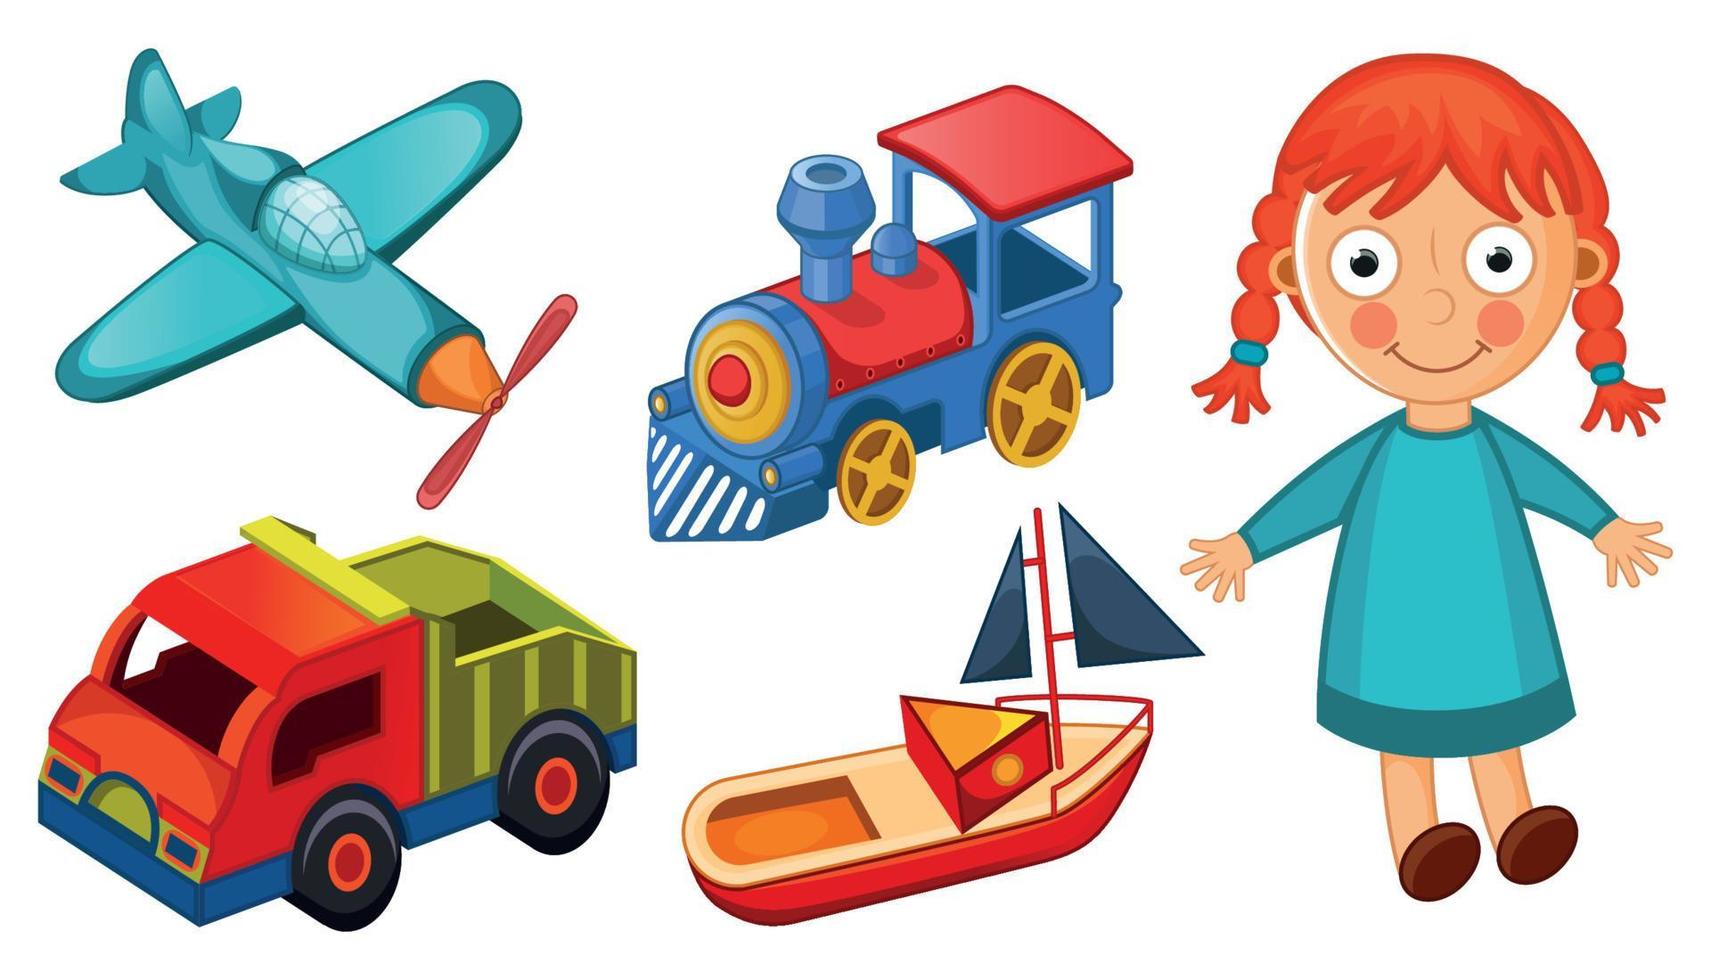 Kids toys isolated on white background vector illustration